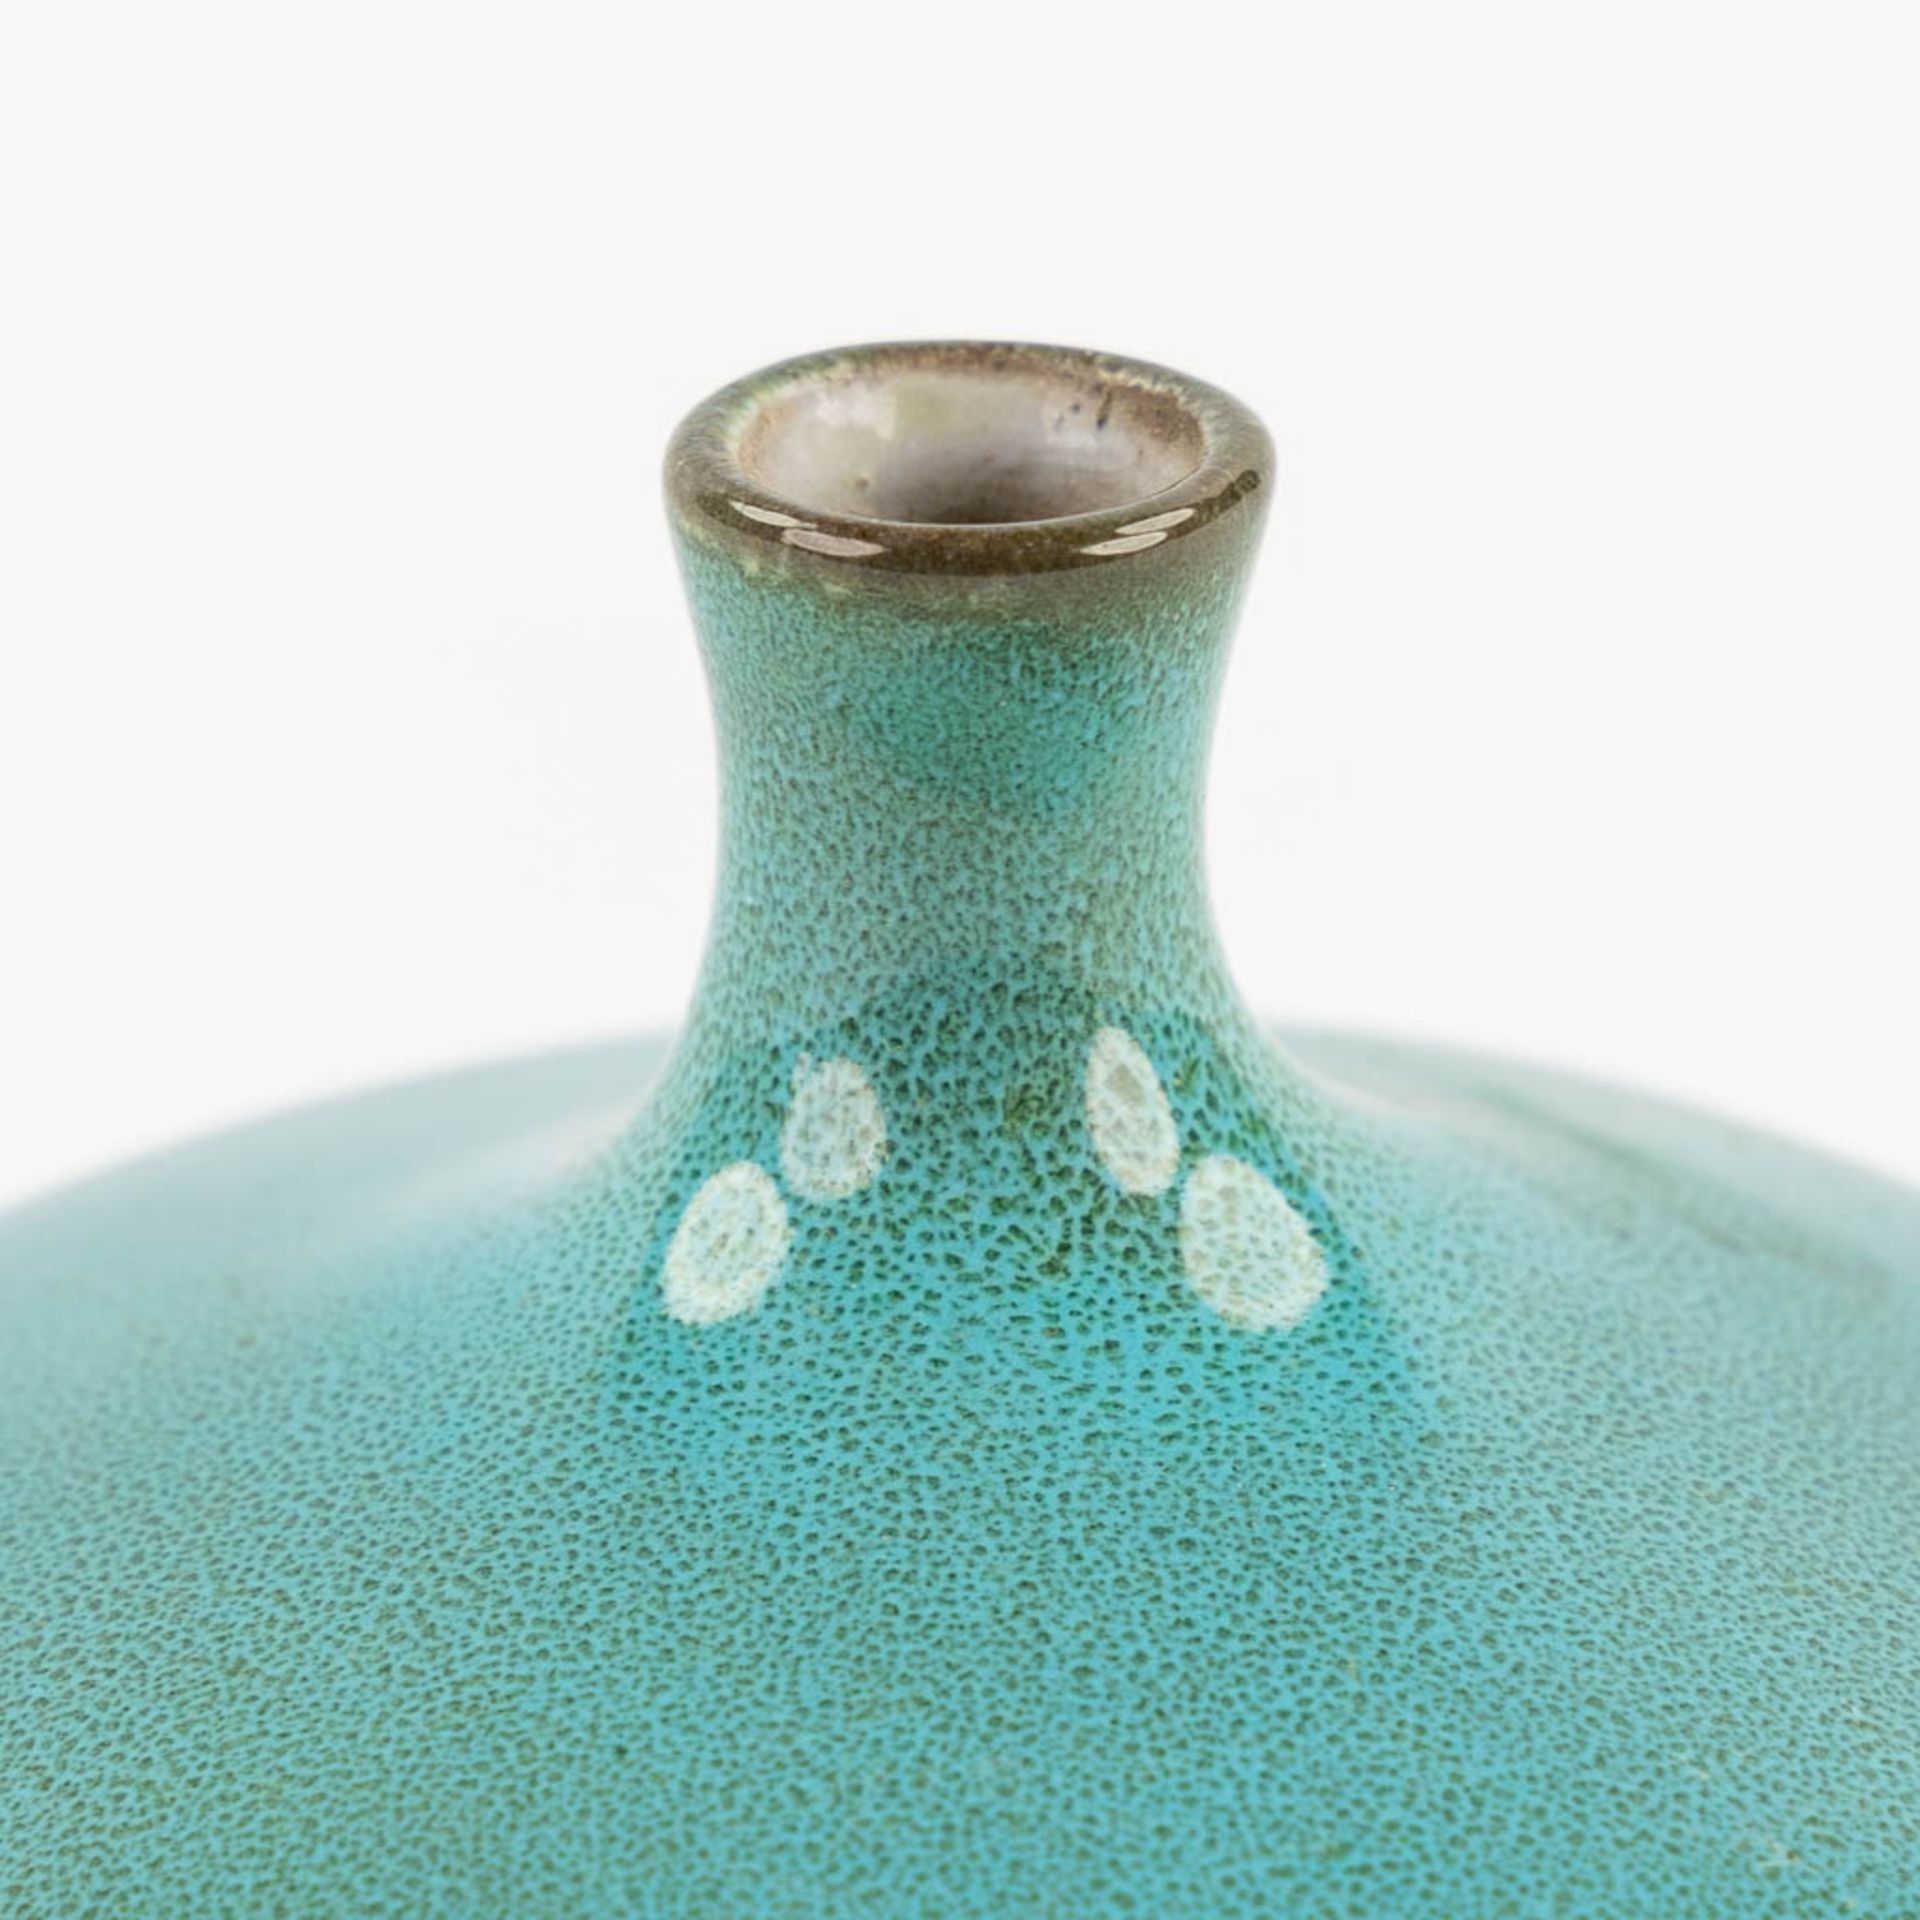 Jacques &amp; Dani RUELLAND (XX-XXI) 'Vase' glazed ceramics. (H:8 x D:10 cm) - Image 10 of 10